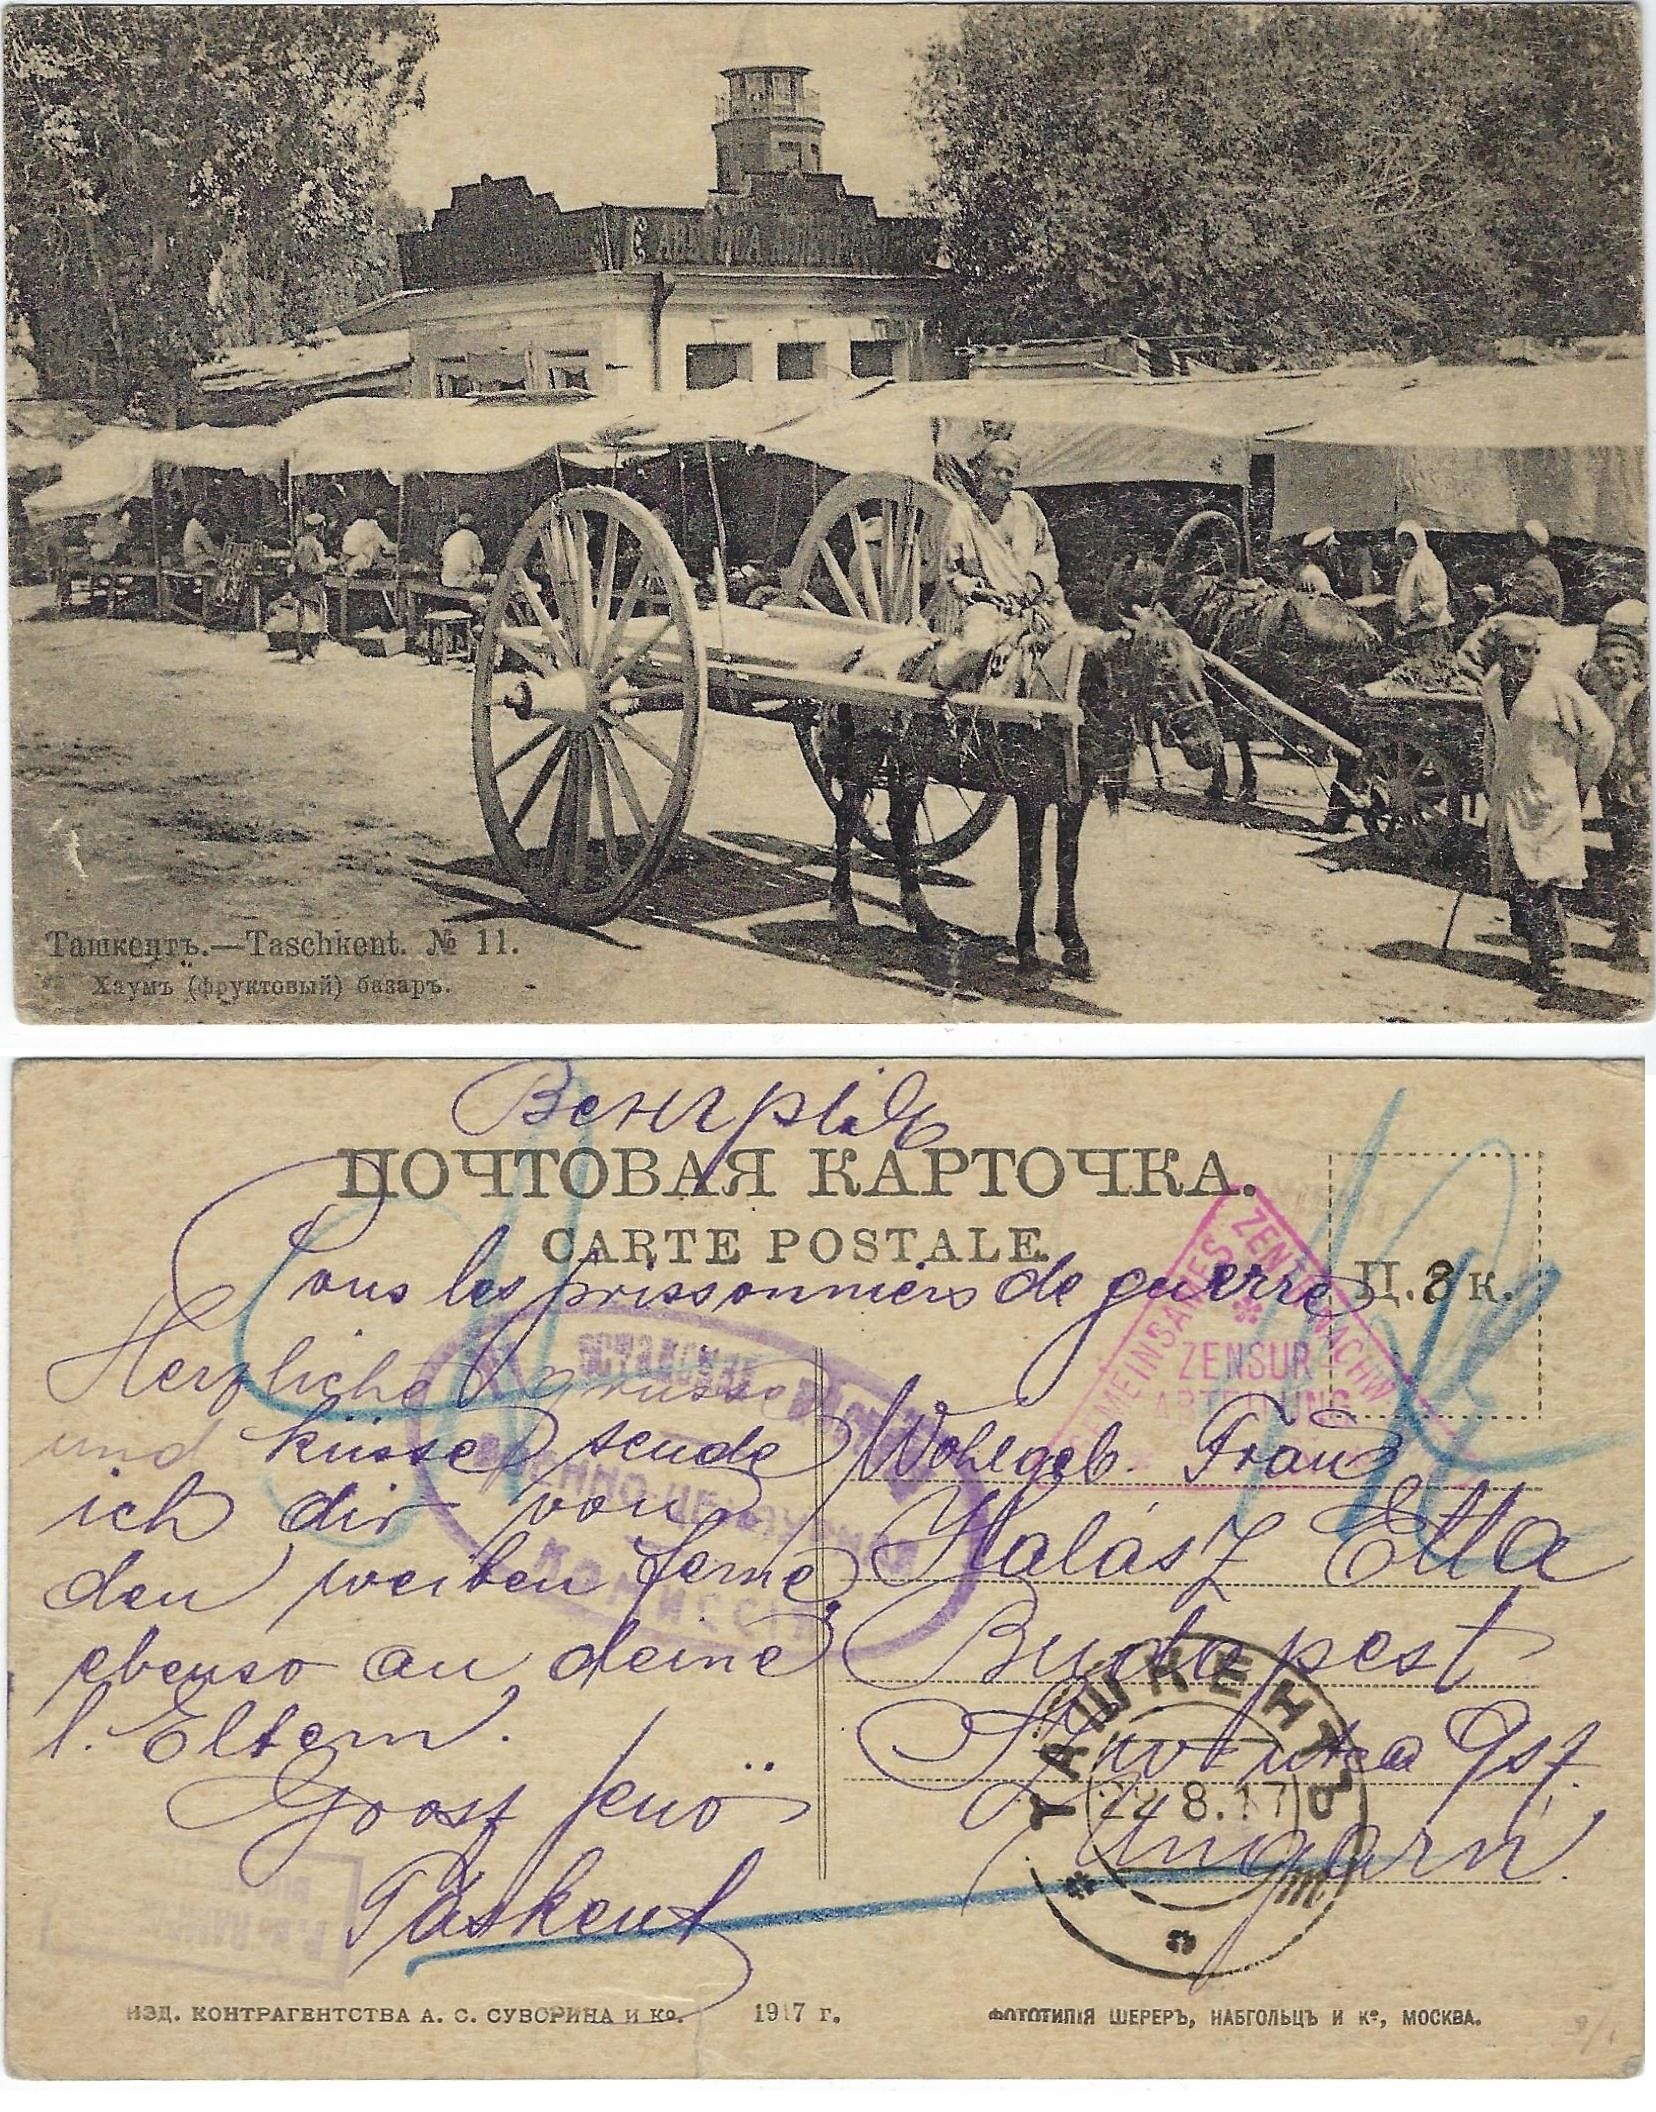 Russia Postal History - Asia. Tashkent Scott 0901917 